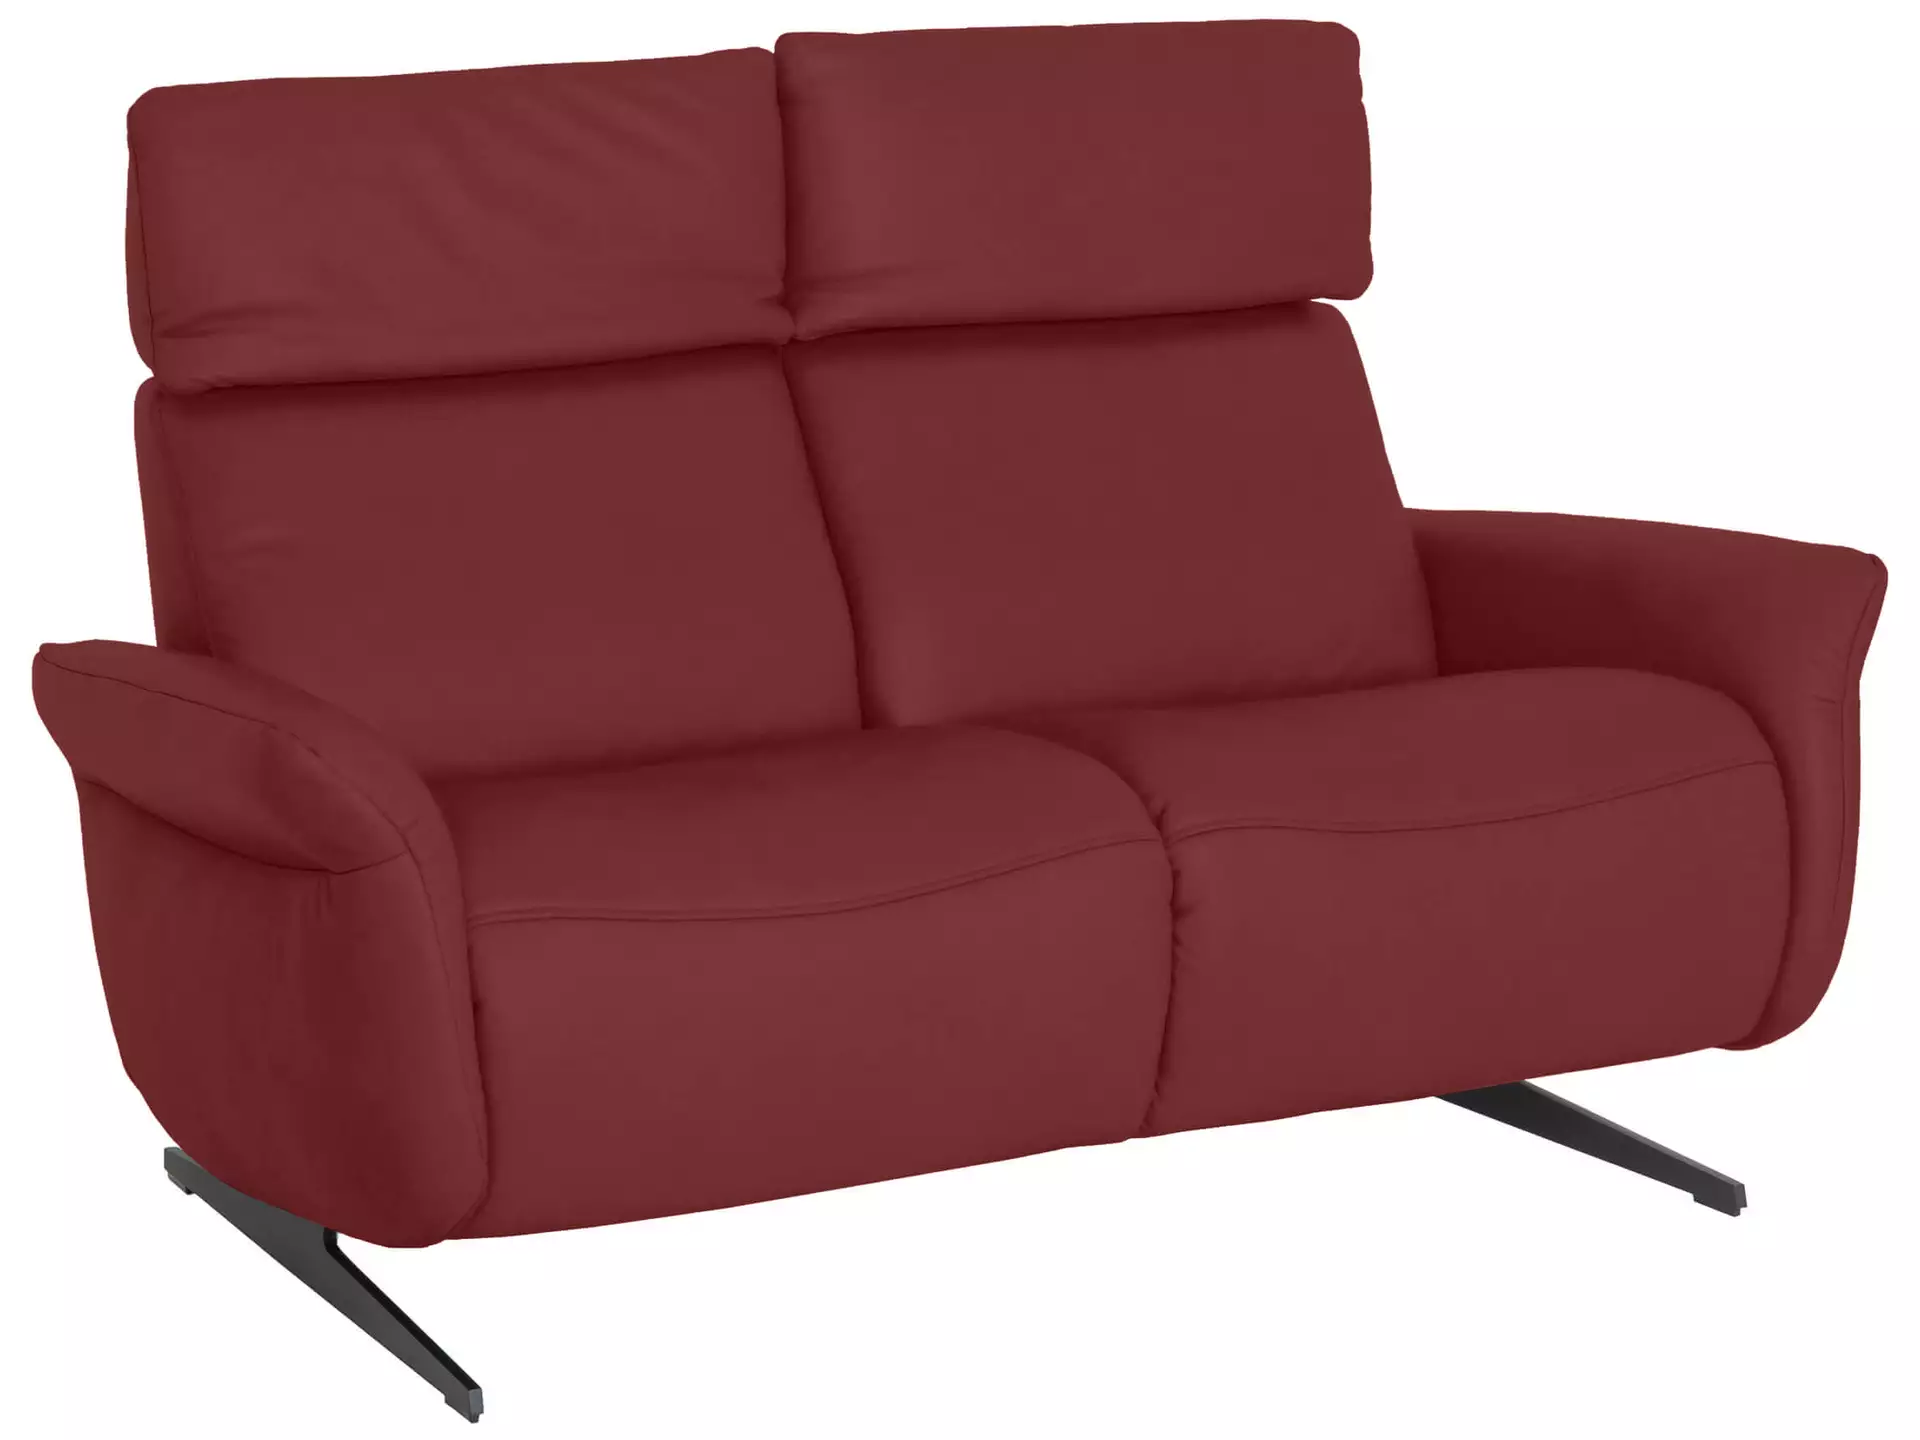 Sofa Patricia Basic B: 149 cm Himolla / Farbe: Merlot / Material: Leder Basic